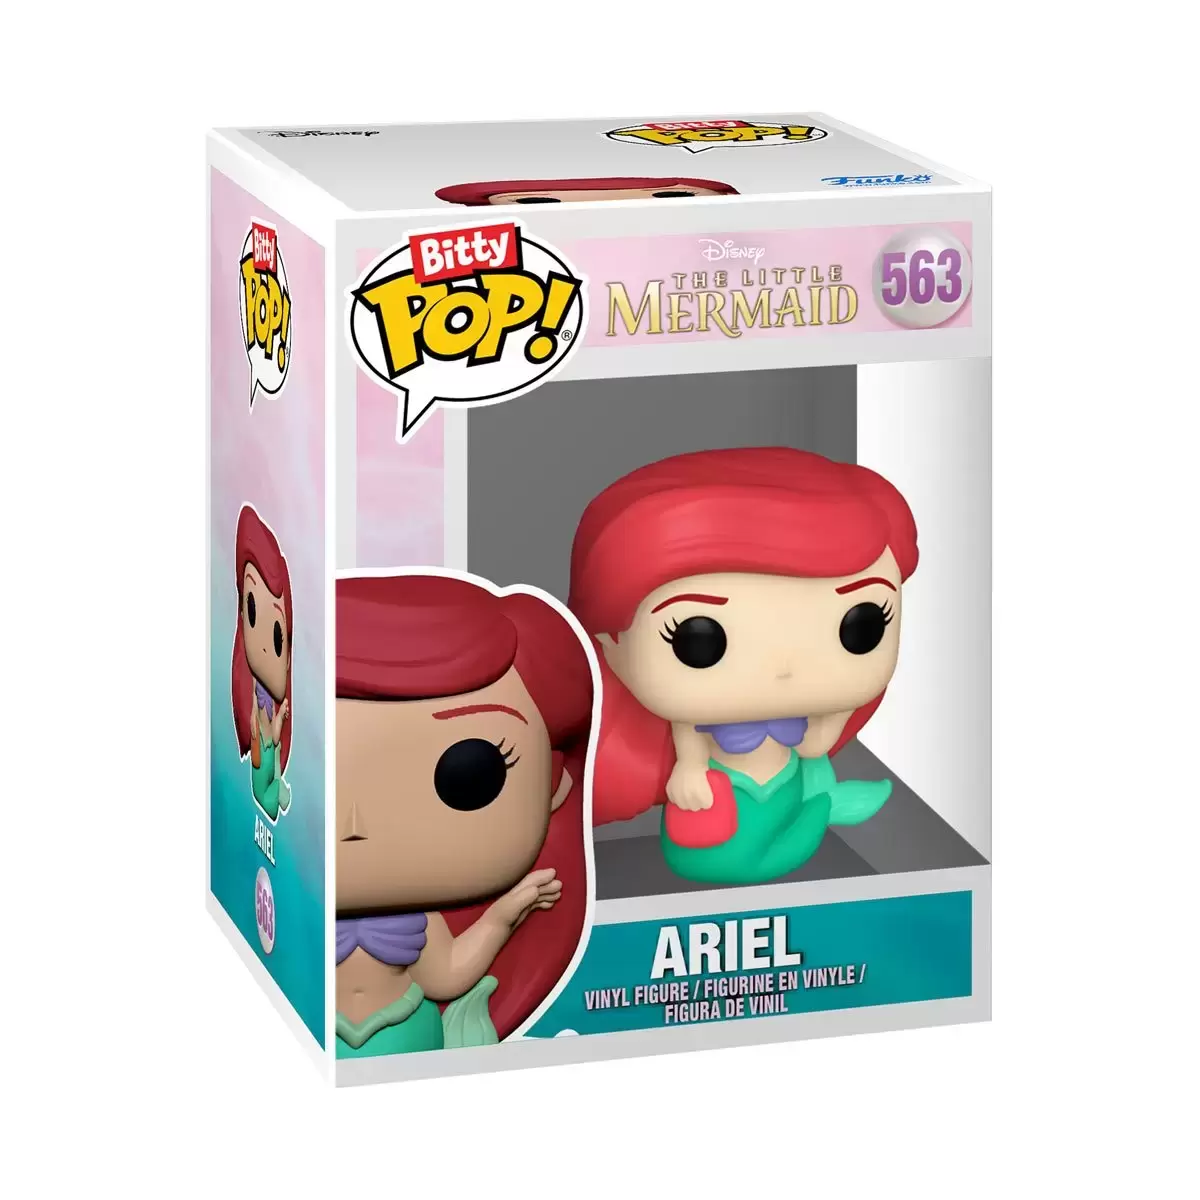 Disney Princess - Ariel - Bitty POP! action figure 563